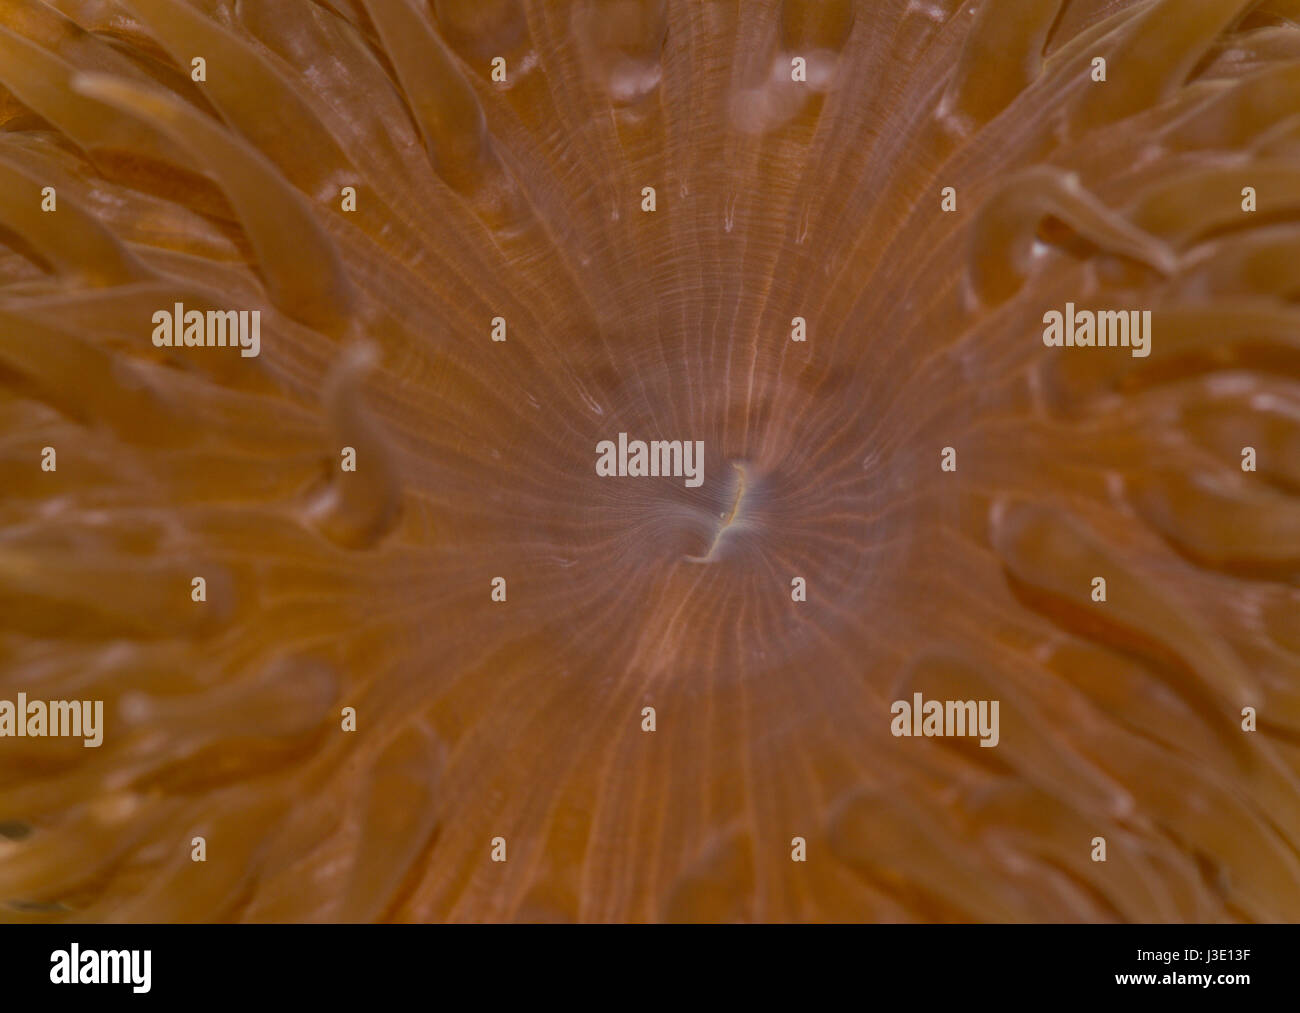 Mouth of Daisy Sea Anemone (Cereus pedunculatus) Stock Photo